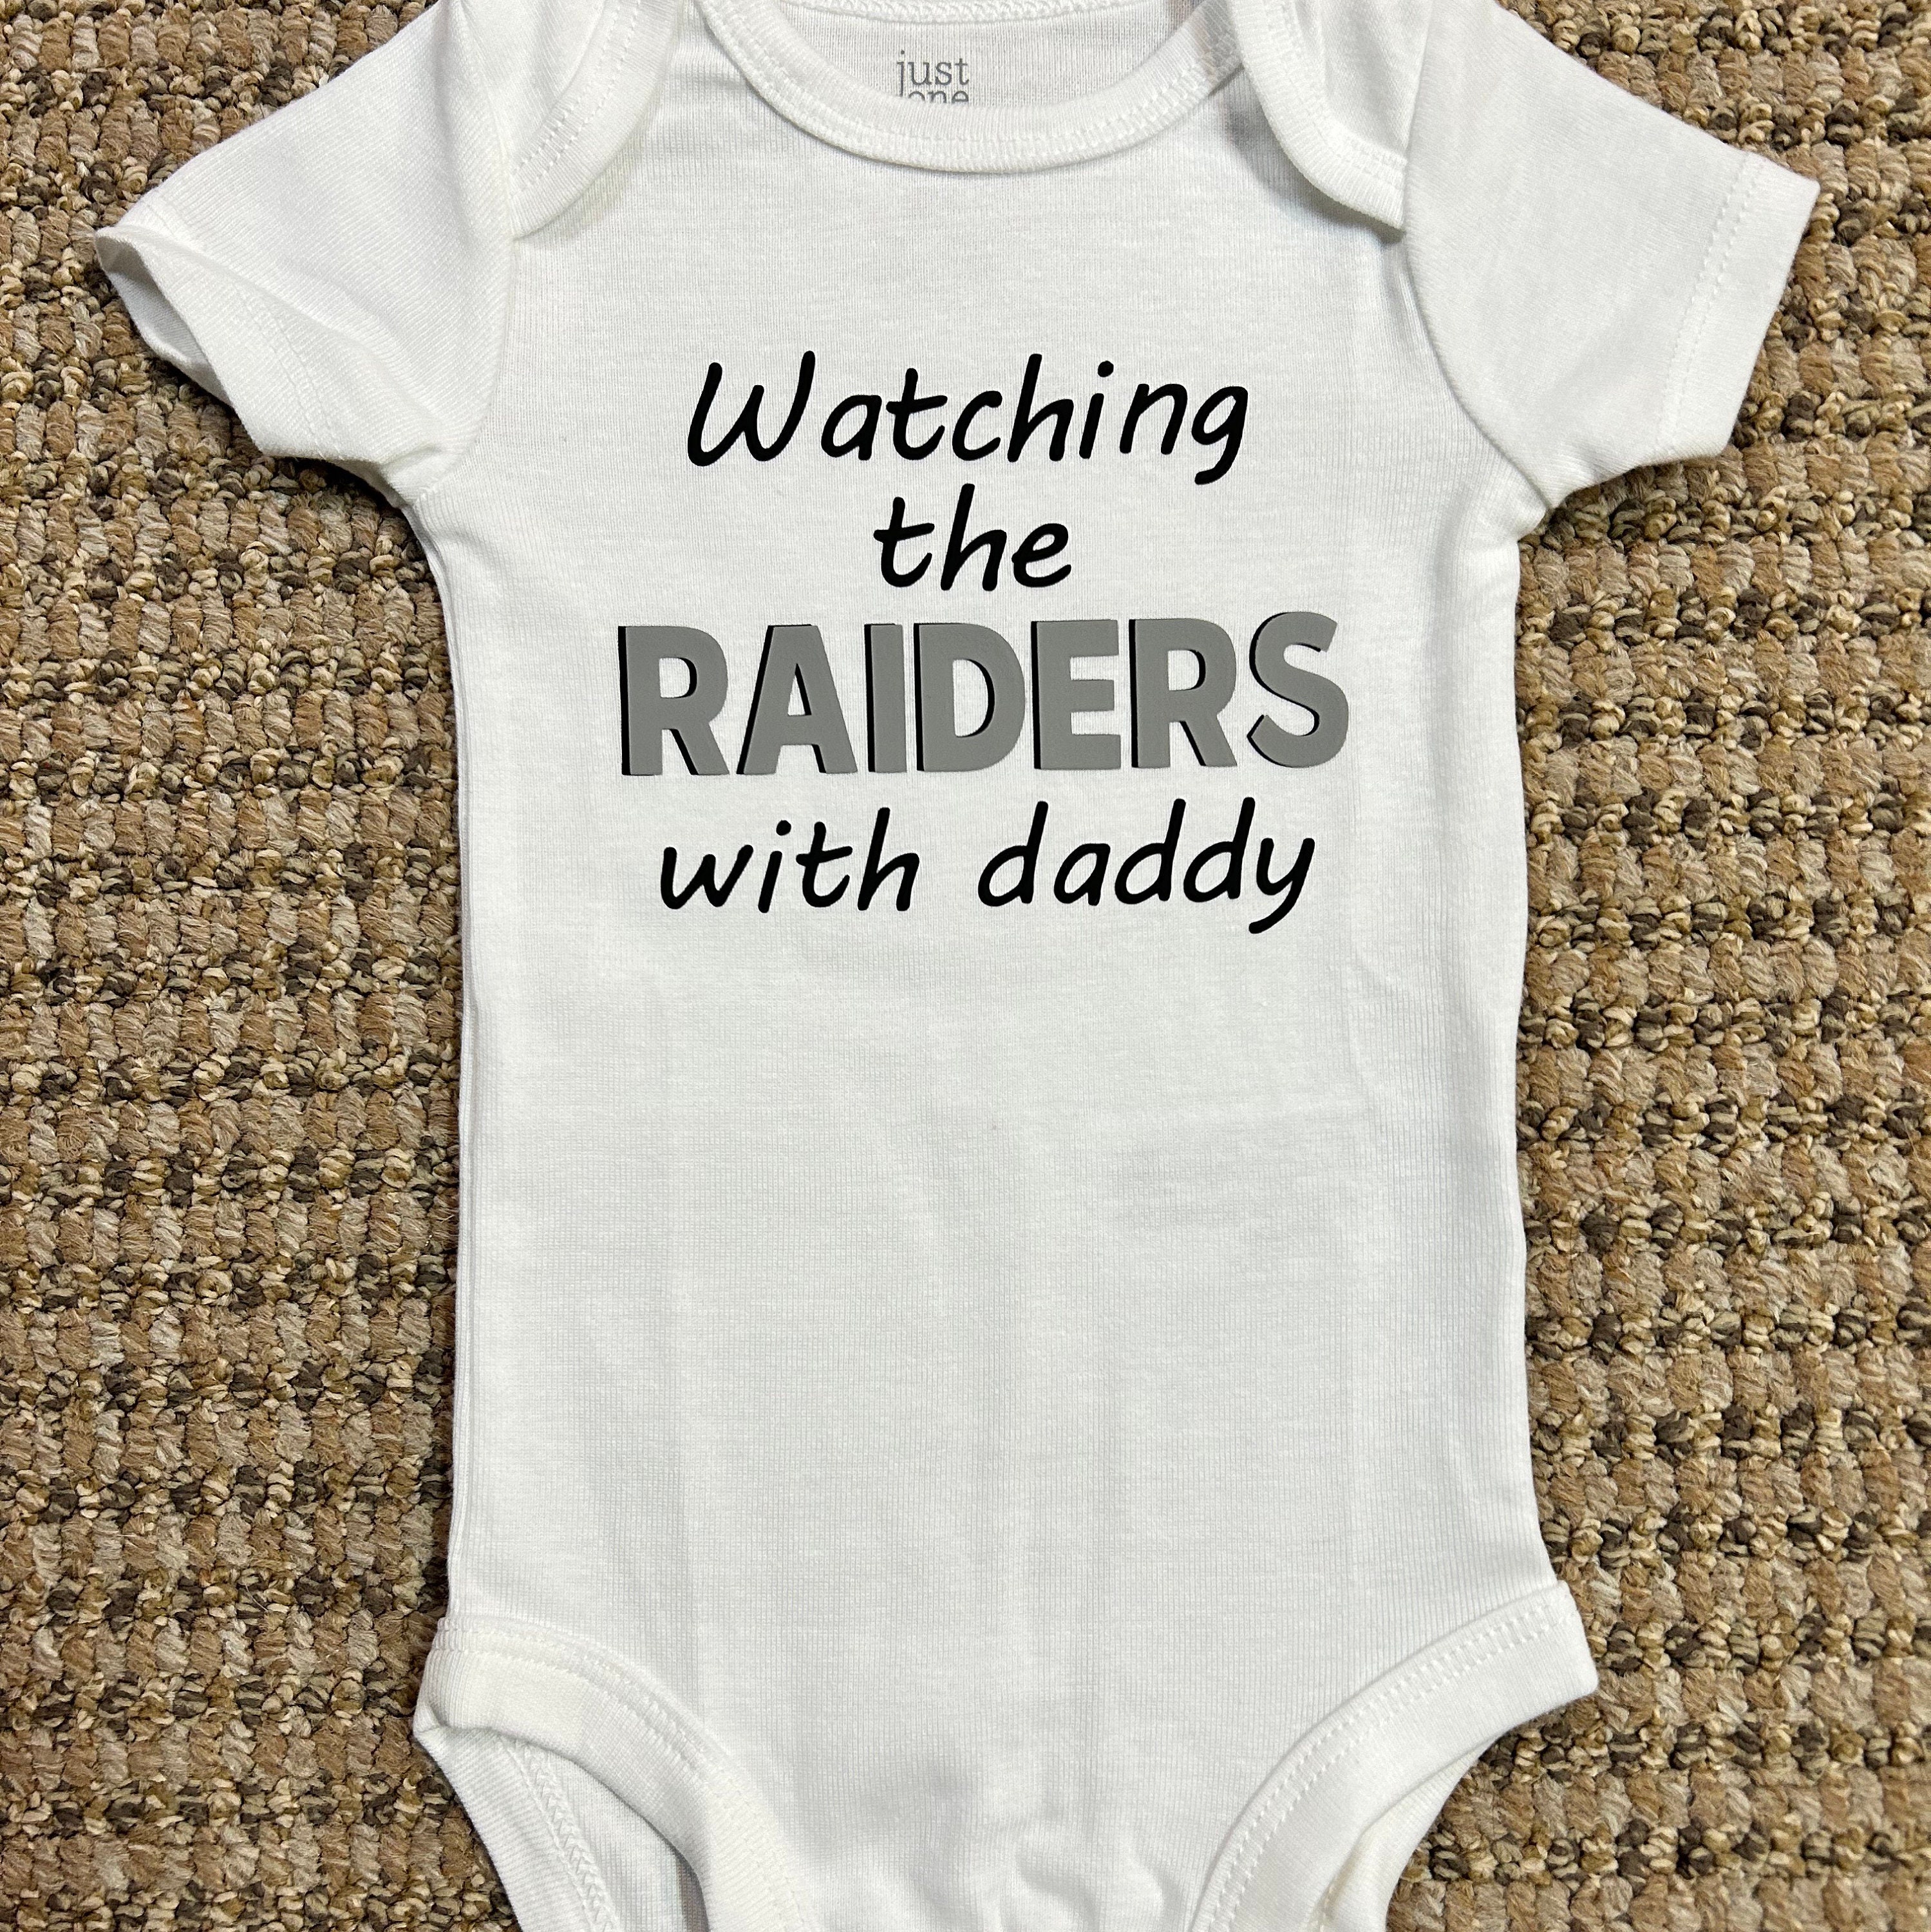 NFL Infant Clothing – Las Vegas Raiders Baby Apparel – babyfans